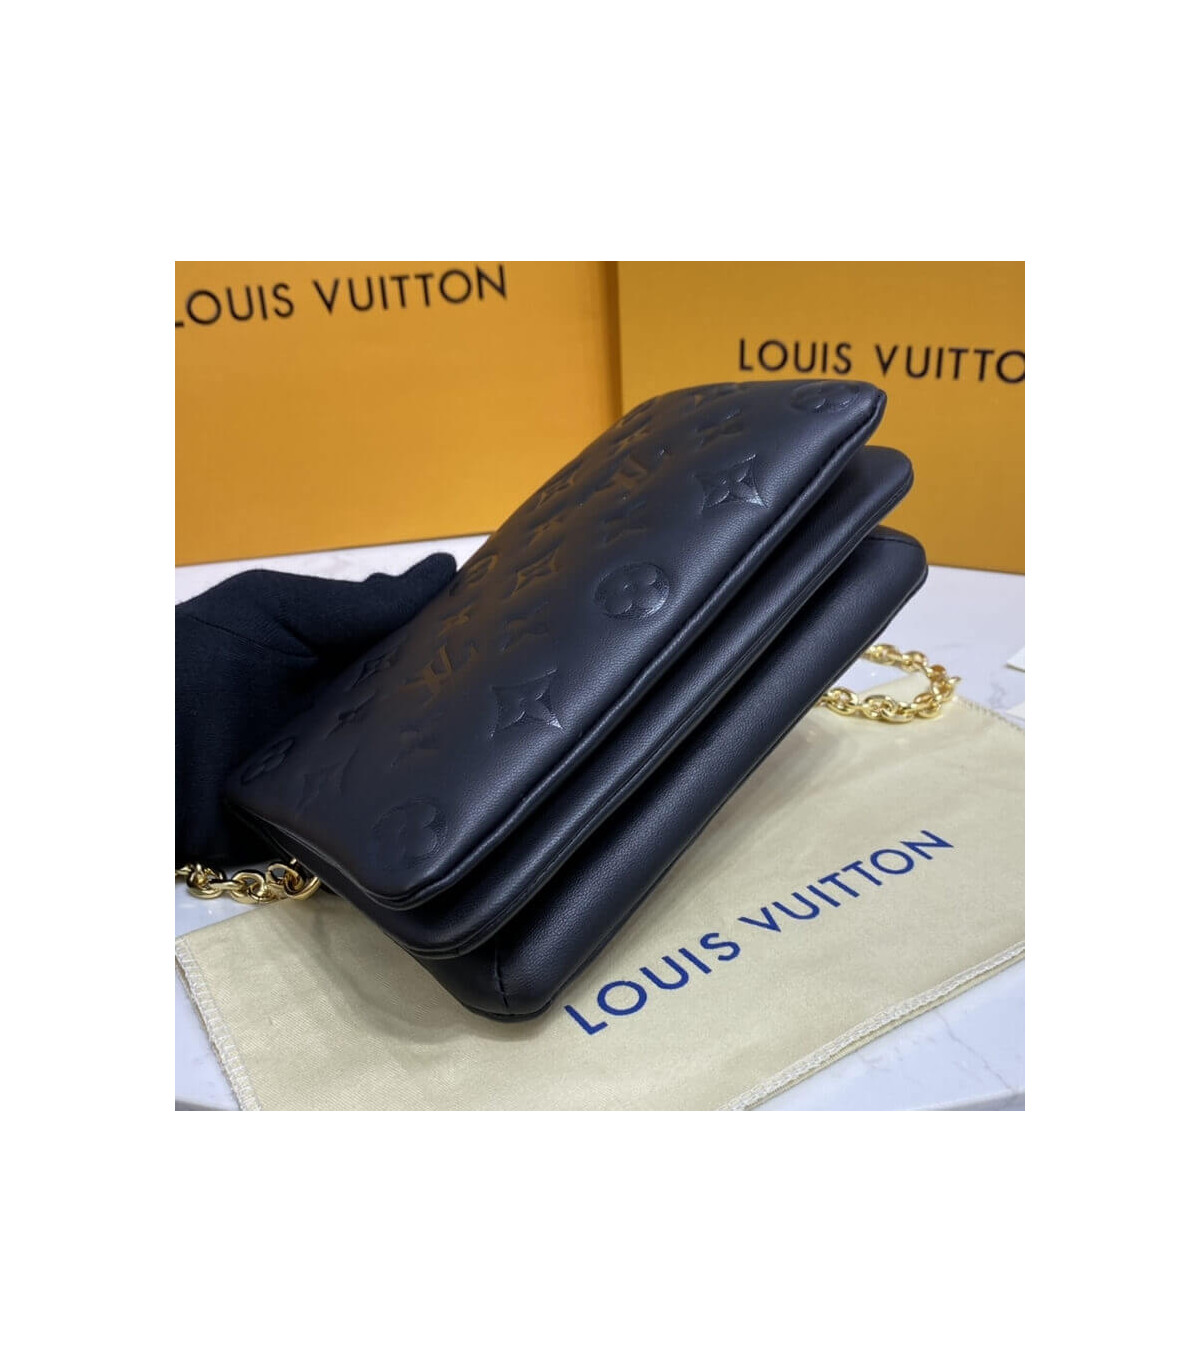 Pochette Coussin H27 in Black - Small Leather Goods M80742, L*V – ZAK BAGS  ©️